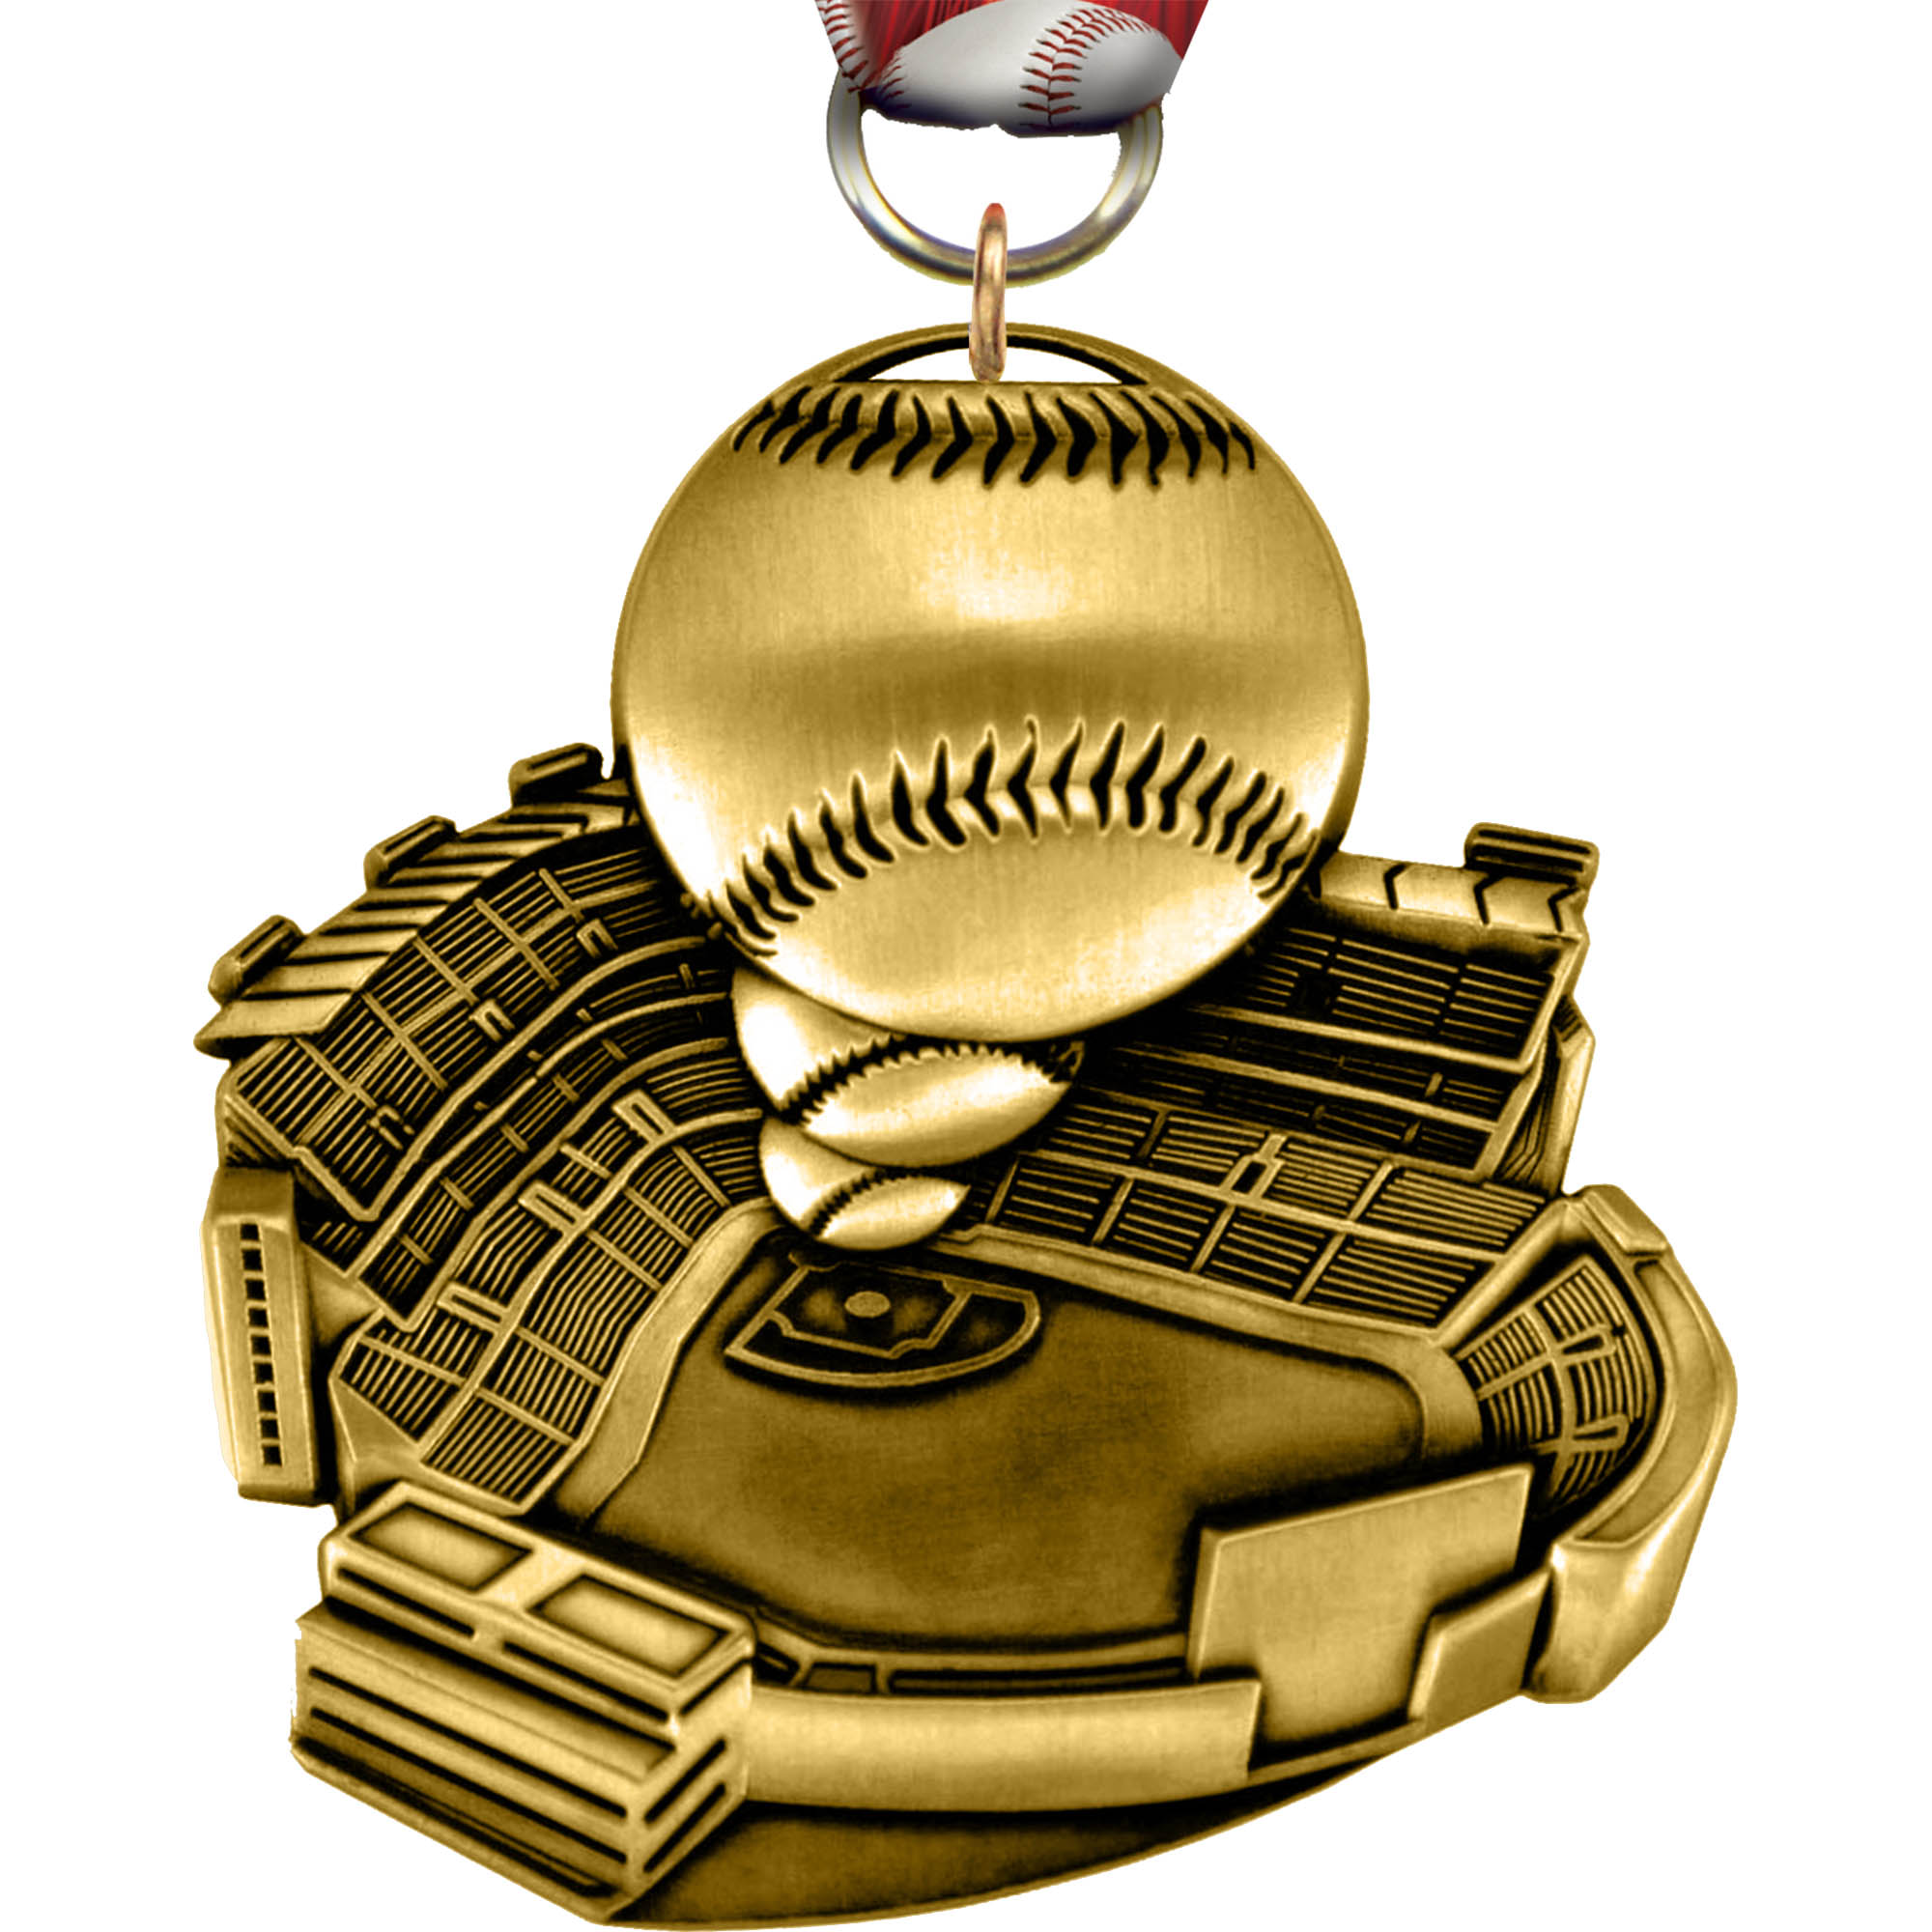 Baseball Stadium Medal